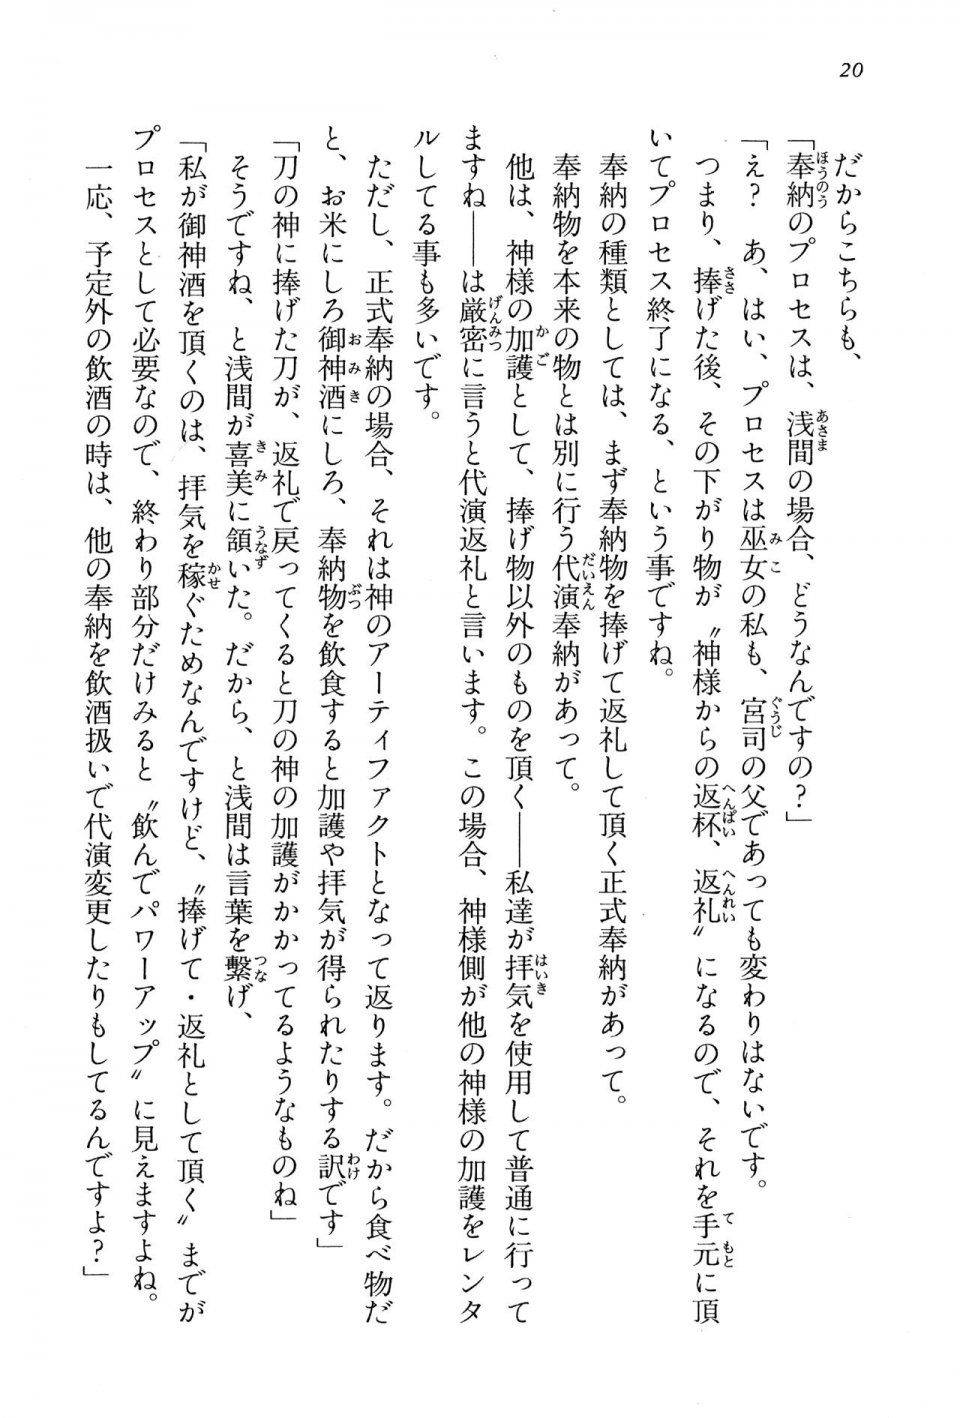 Kyoukai Senjou no Horizon BD Special Mininovel Vol 5(3A) - Photo #24